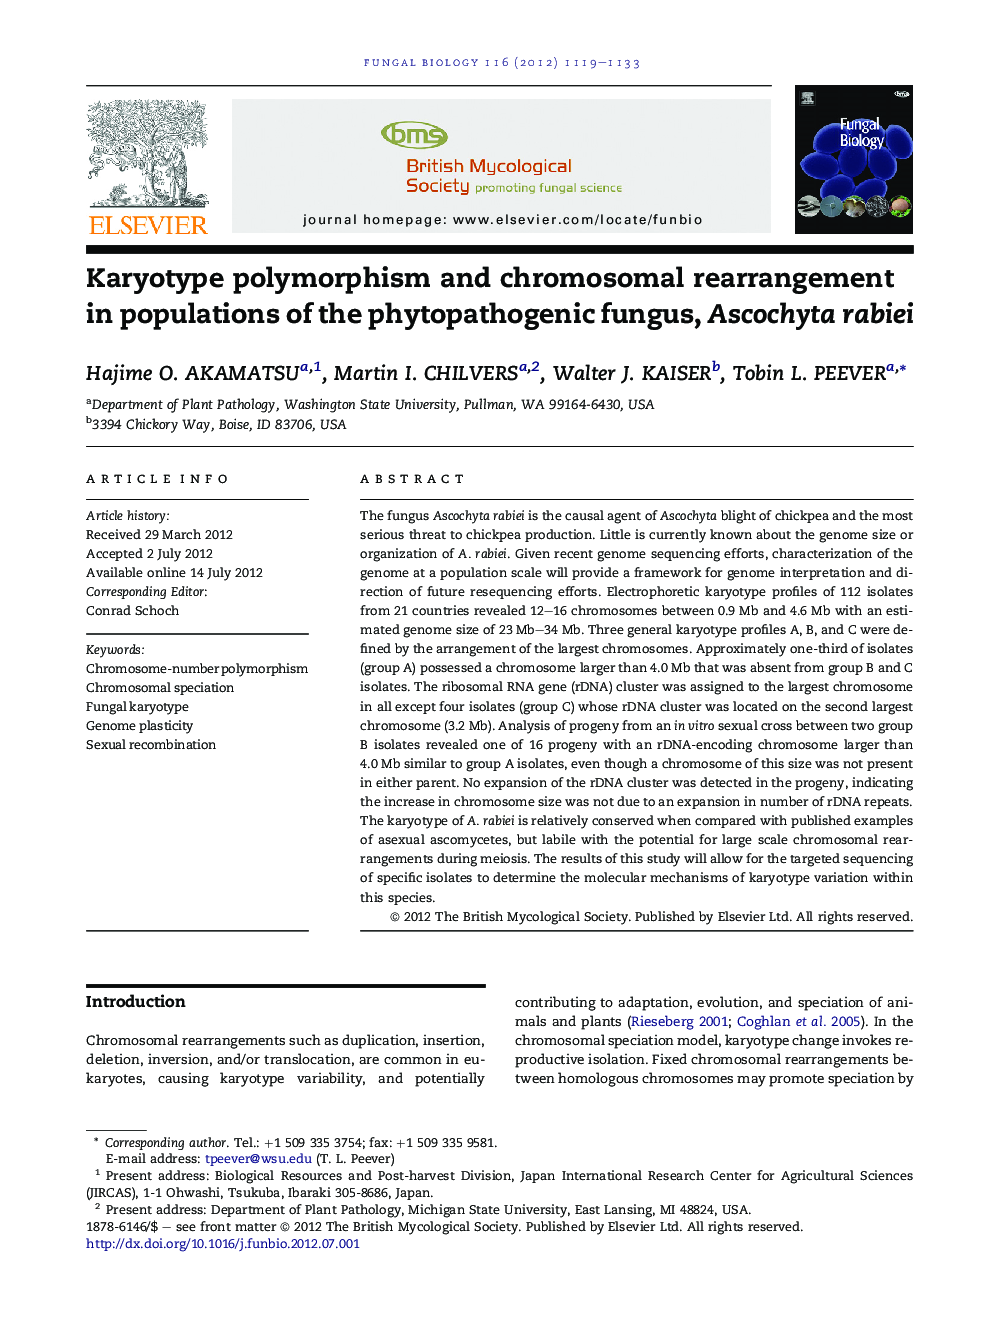 Karyotype polymorphism and chromosomal rearrangement in populations of the phytopathogenic fungus, Ascochyta rabiei